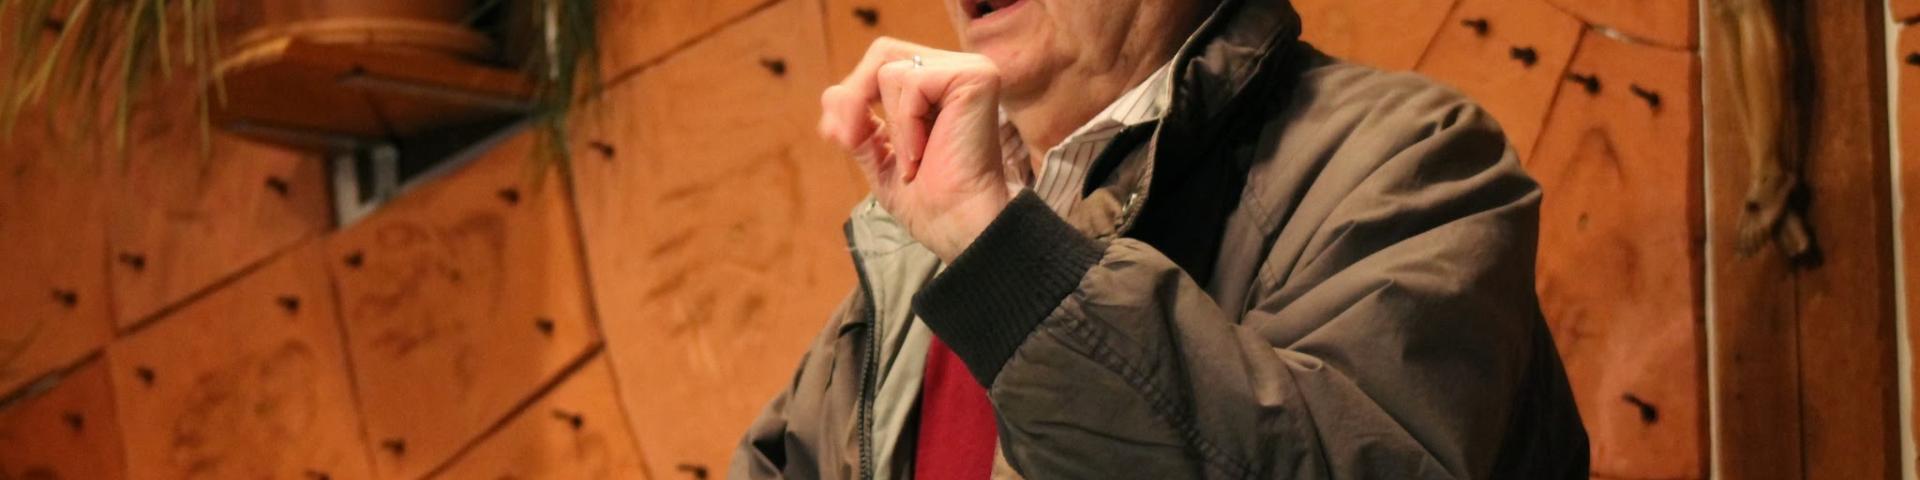 male sign language interpreter